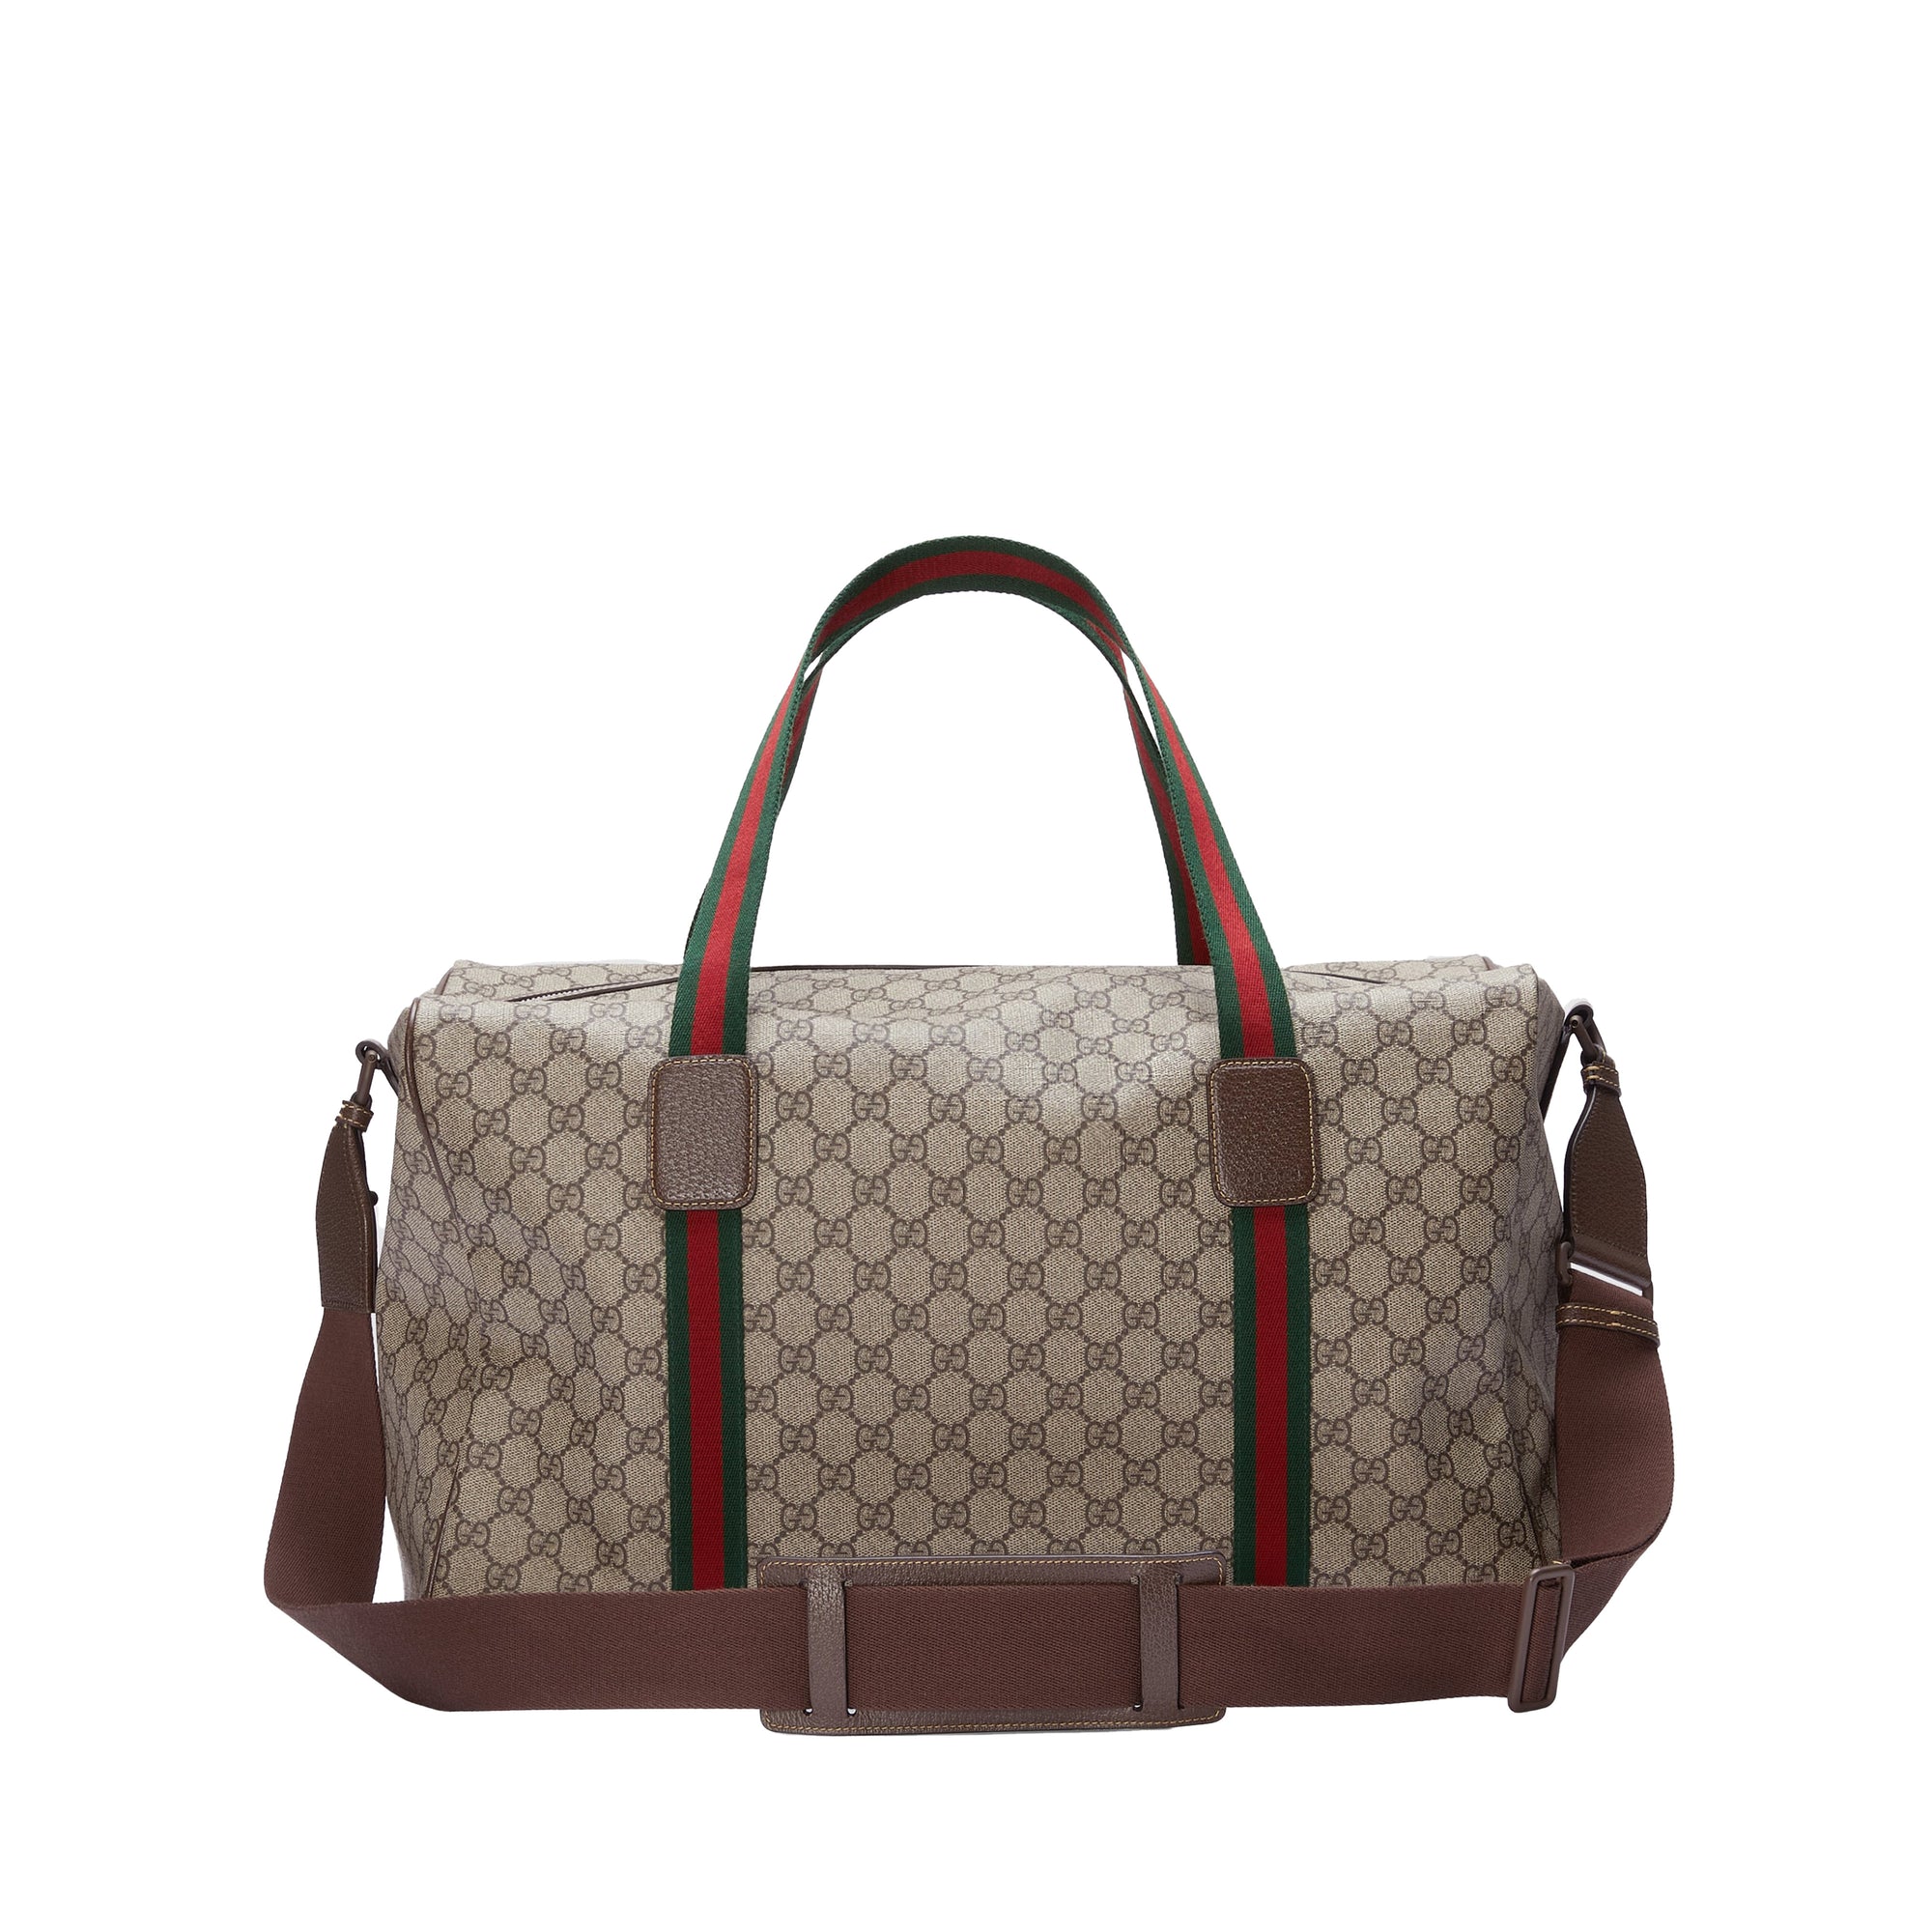 Gucci - Men’s Large Duffle Bag With Web - (Beige/Ebony) view 3